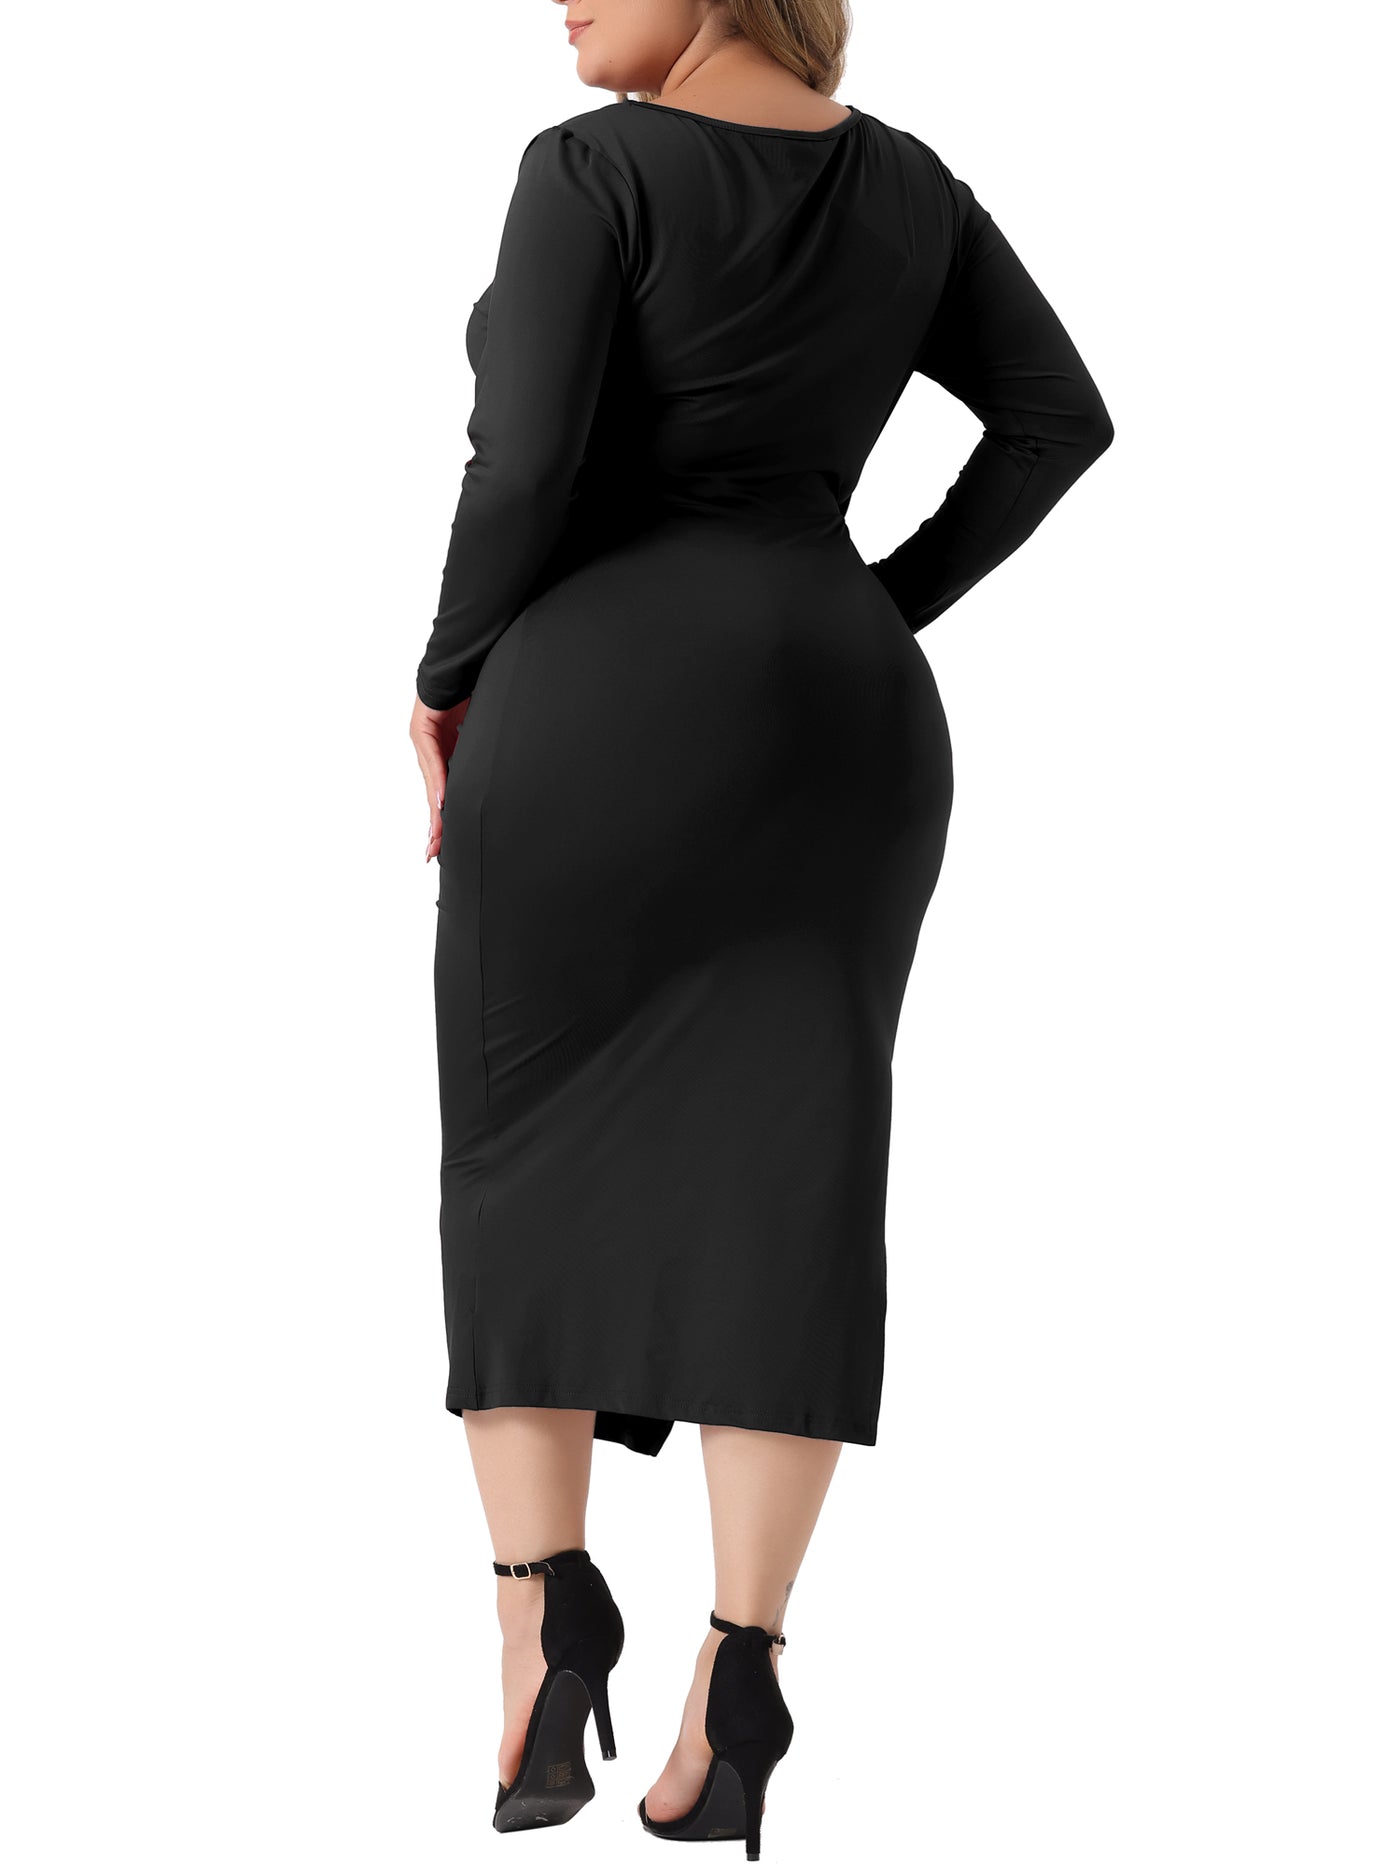 Bublédon Plus Size Dress for Women Long Sleeve Crew Neck Side Slit Ruched Bodycon Dresses